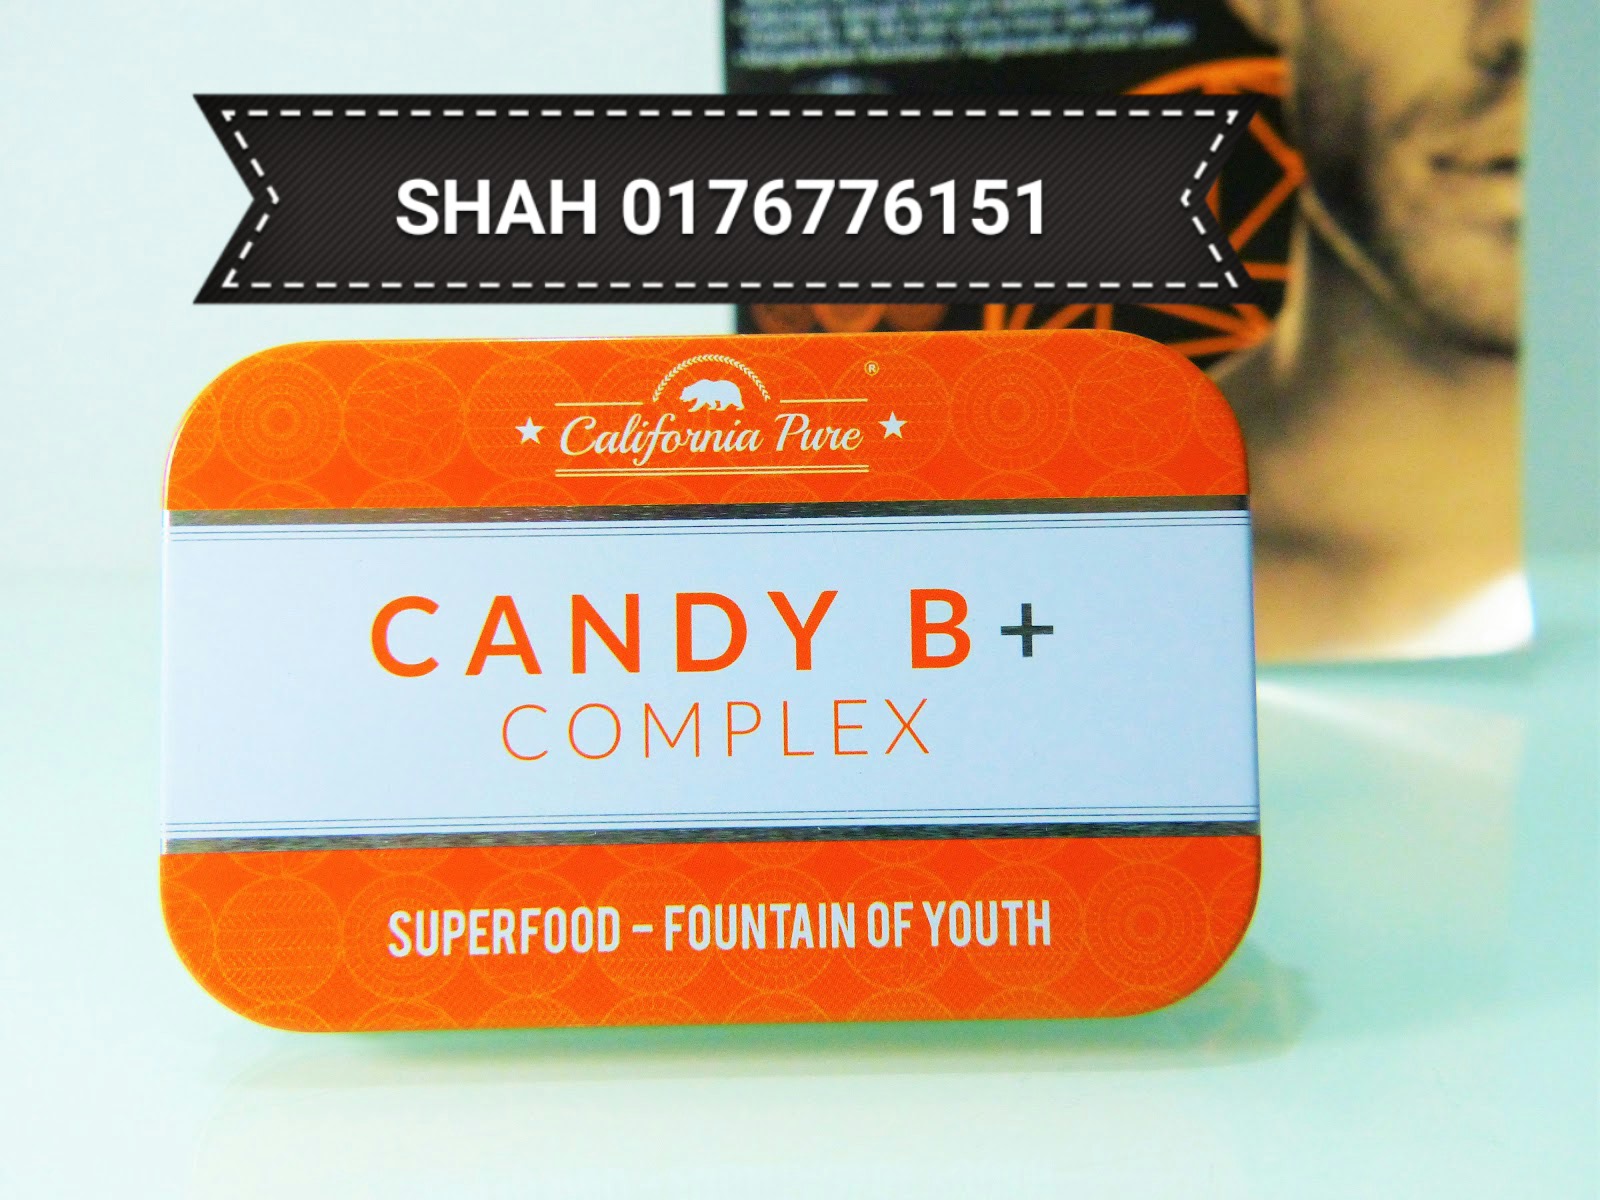 Candy B+ Complex  Gula-Gula Khas Untuk Lelaki